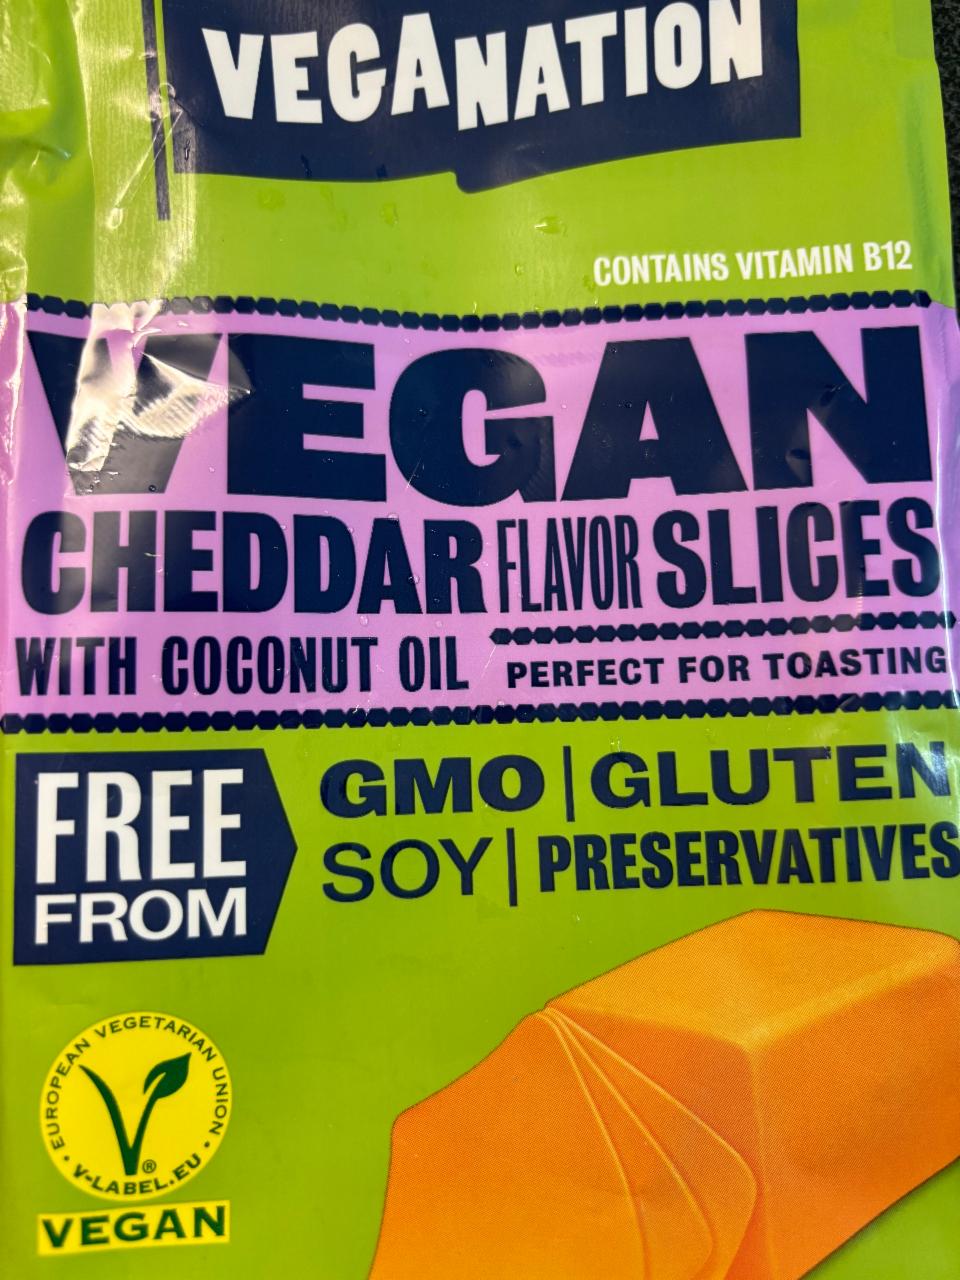 Fotografie - Vegan Cheddar flavor slices with coconut oil Veganation